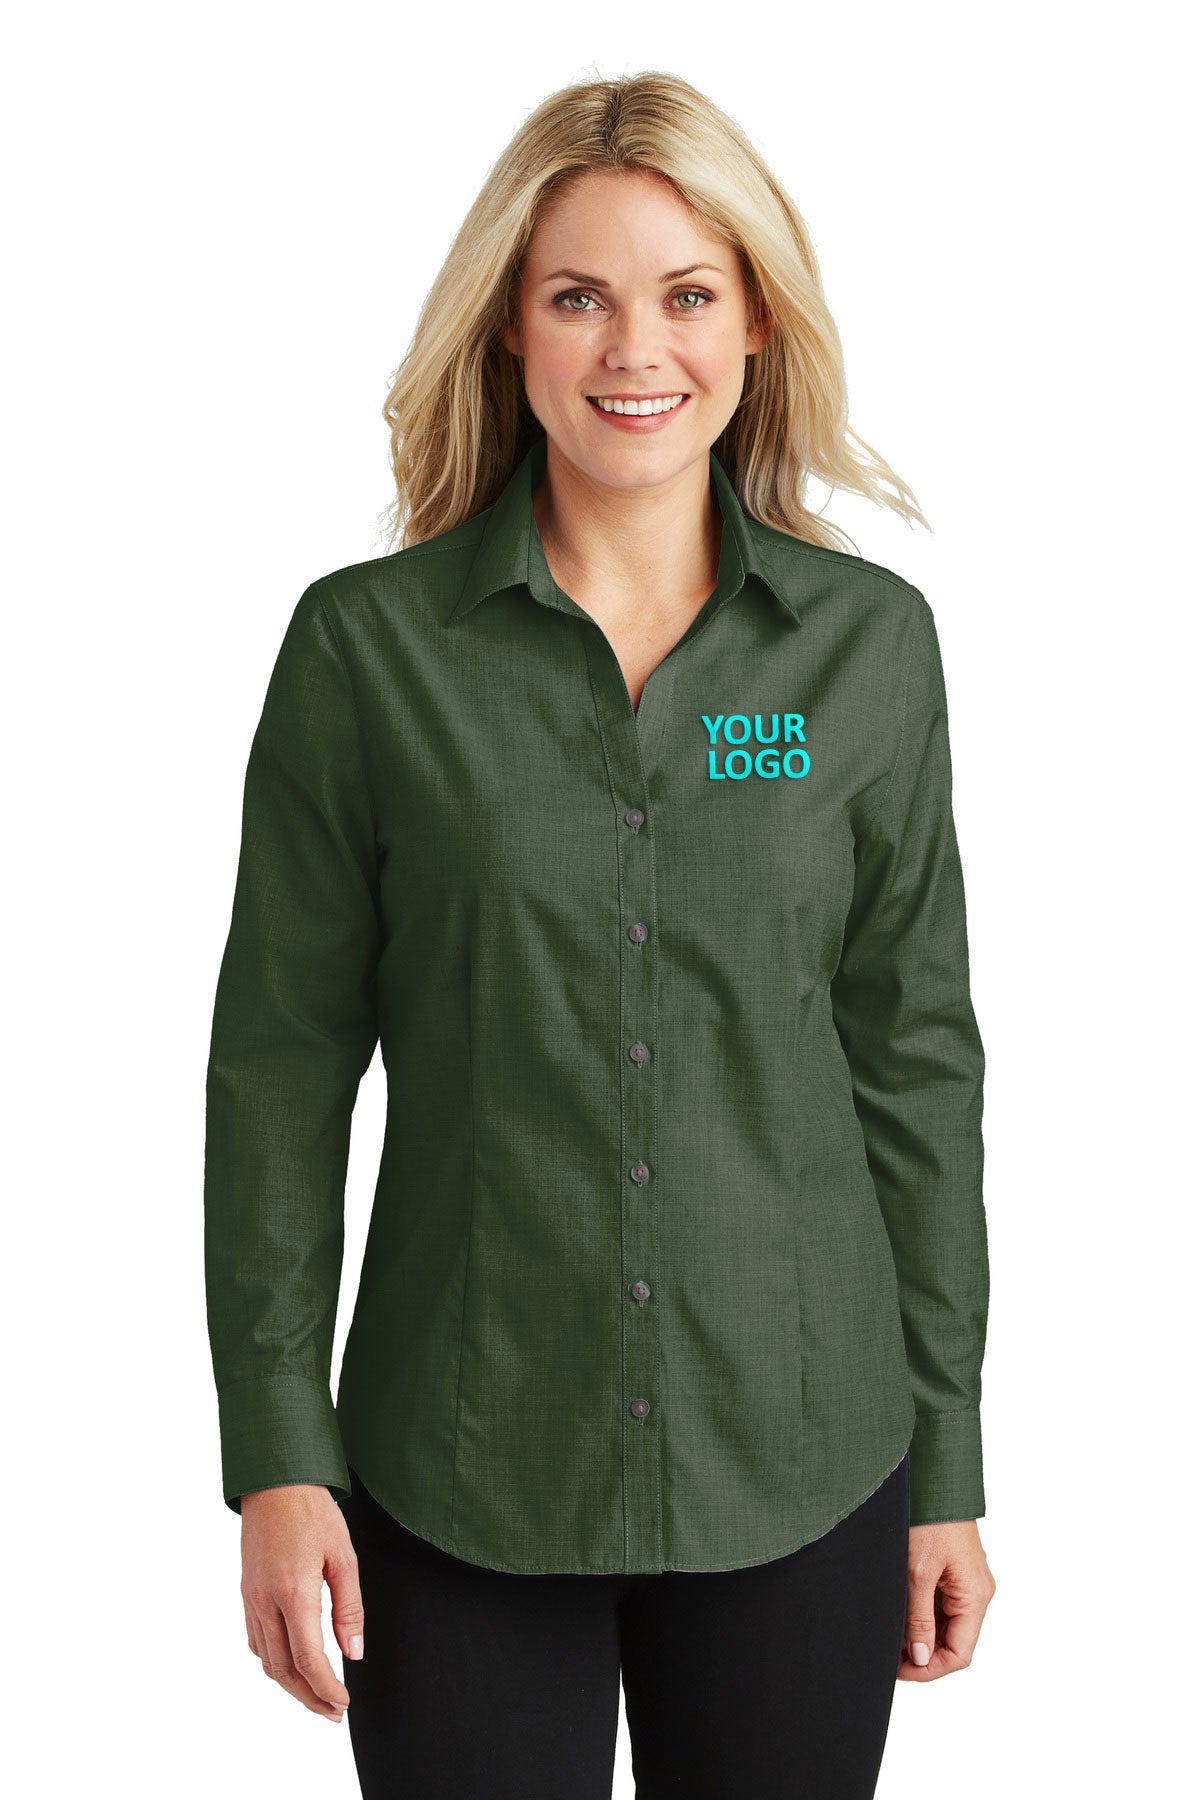 Port Authority Dark Cactus Green L640 custom logo shirts